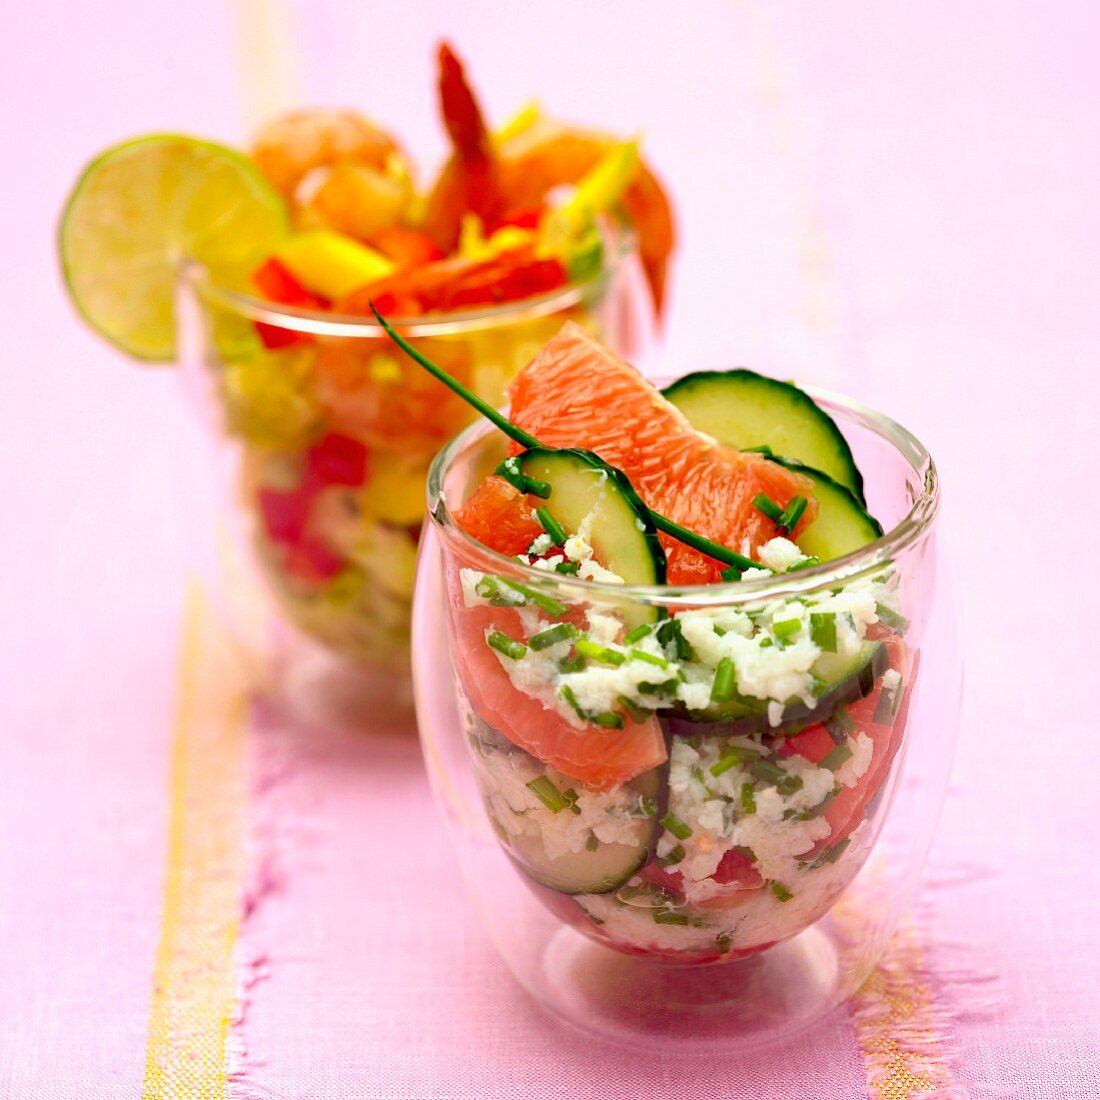 Crab salad with grapefruit and shrimp salad with mango